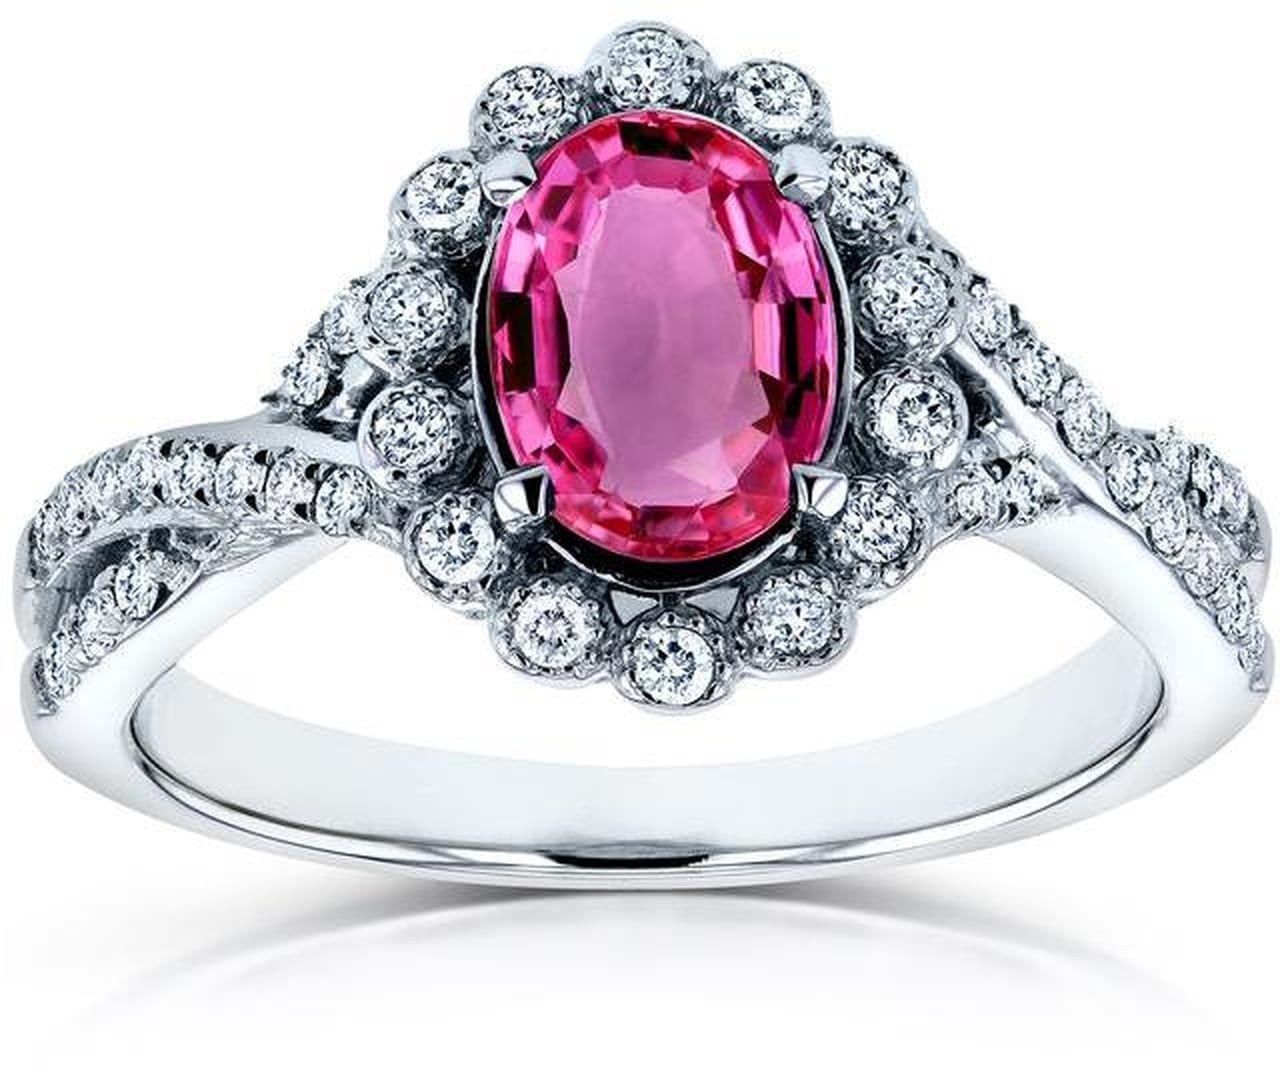 Princess Eugenie's Engagement Ring | POPSUGAR Fashion